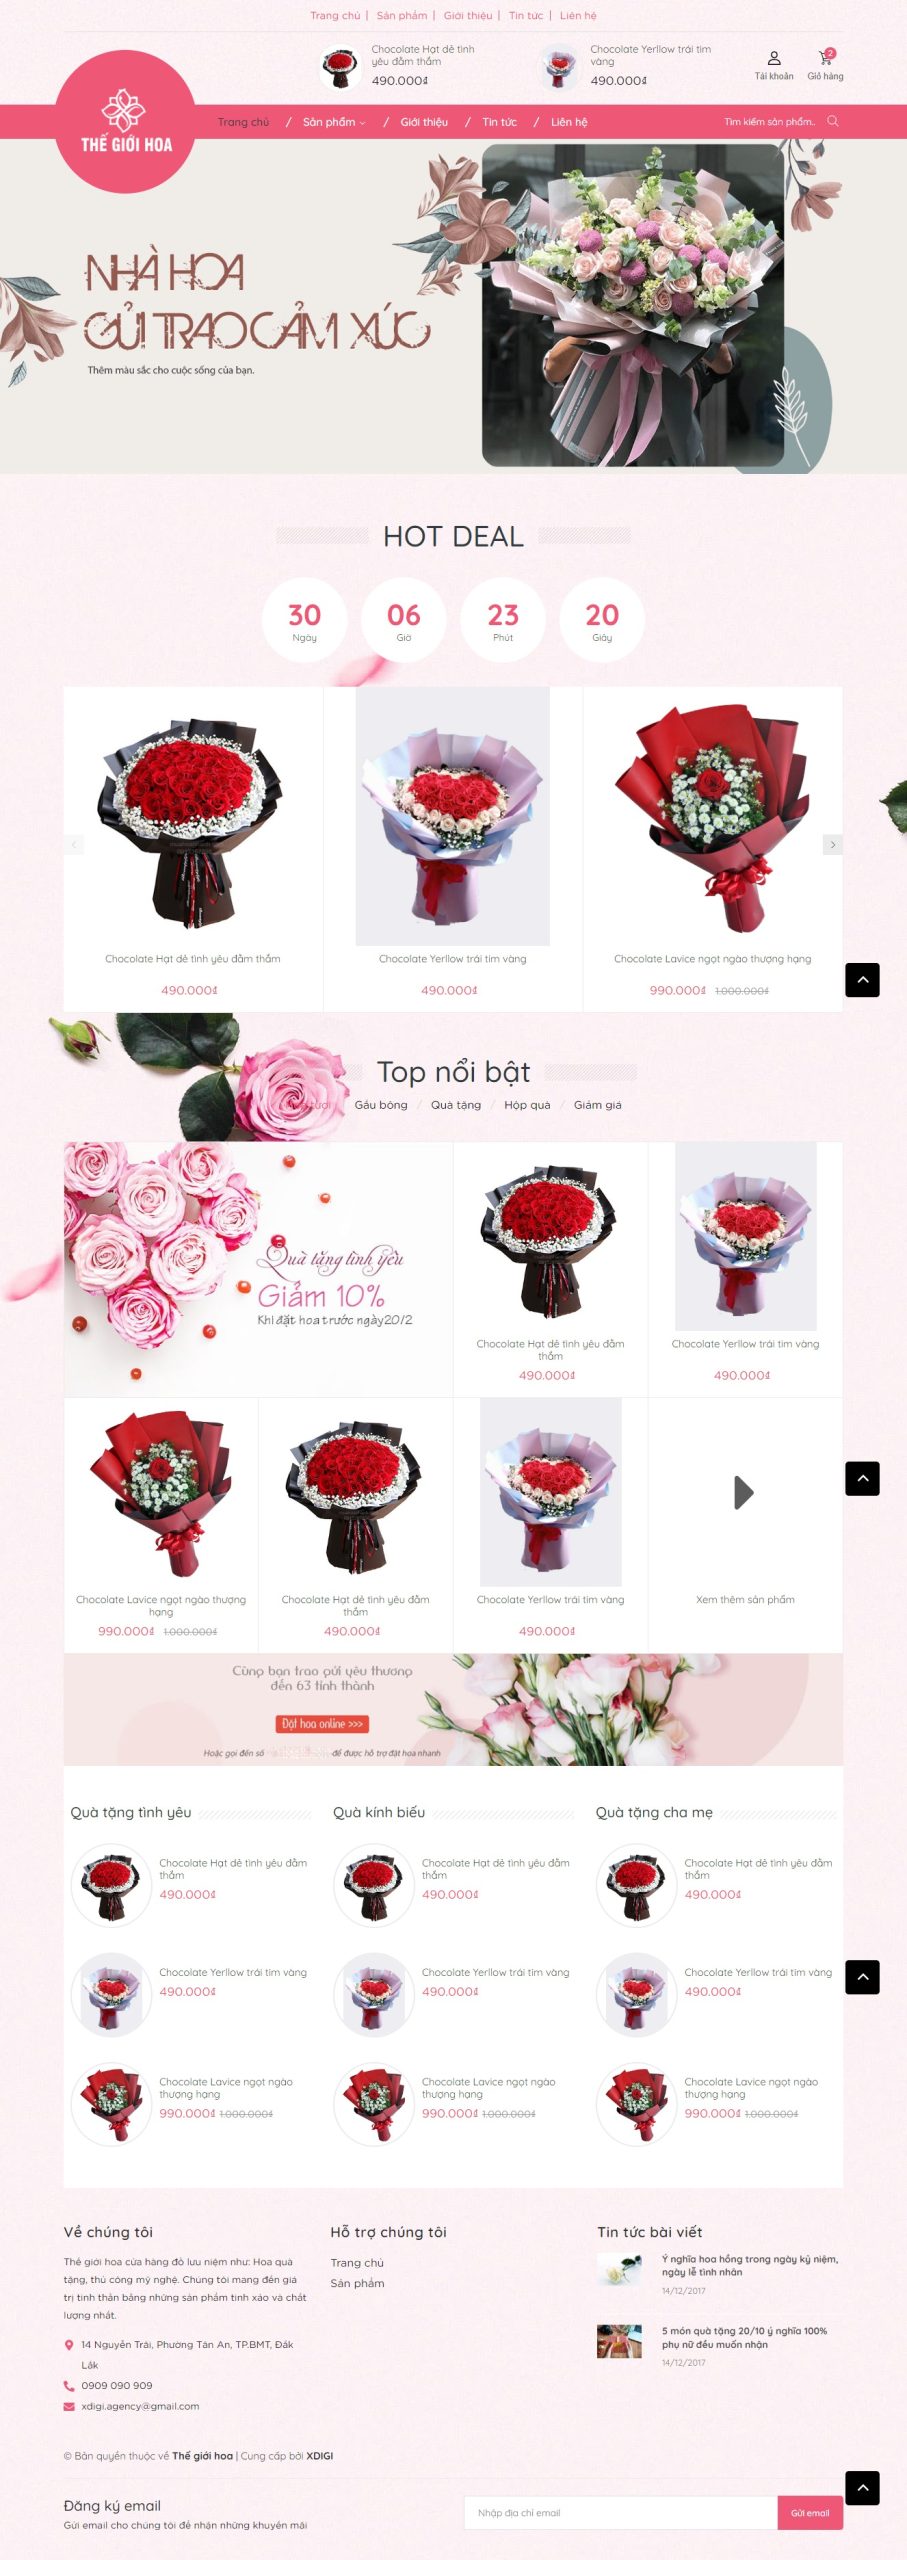 Shop hoa, quà tặng – Thế giới hoa – BH-013